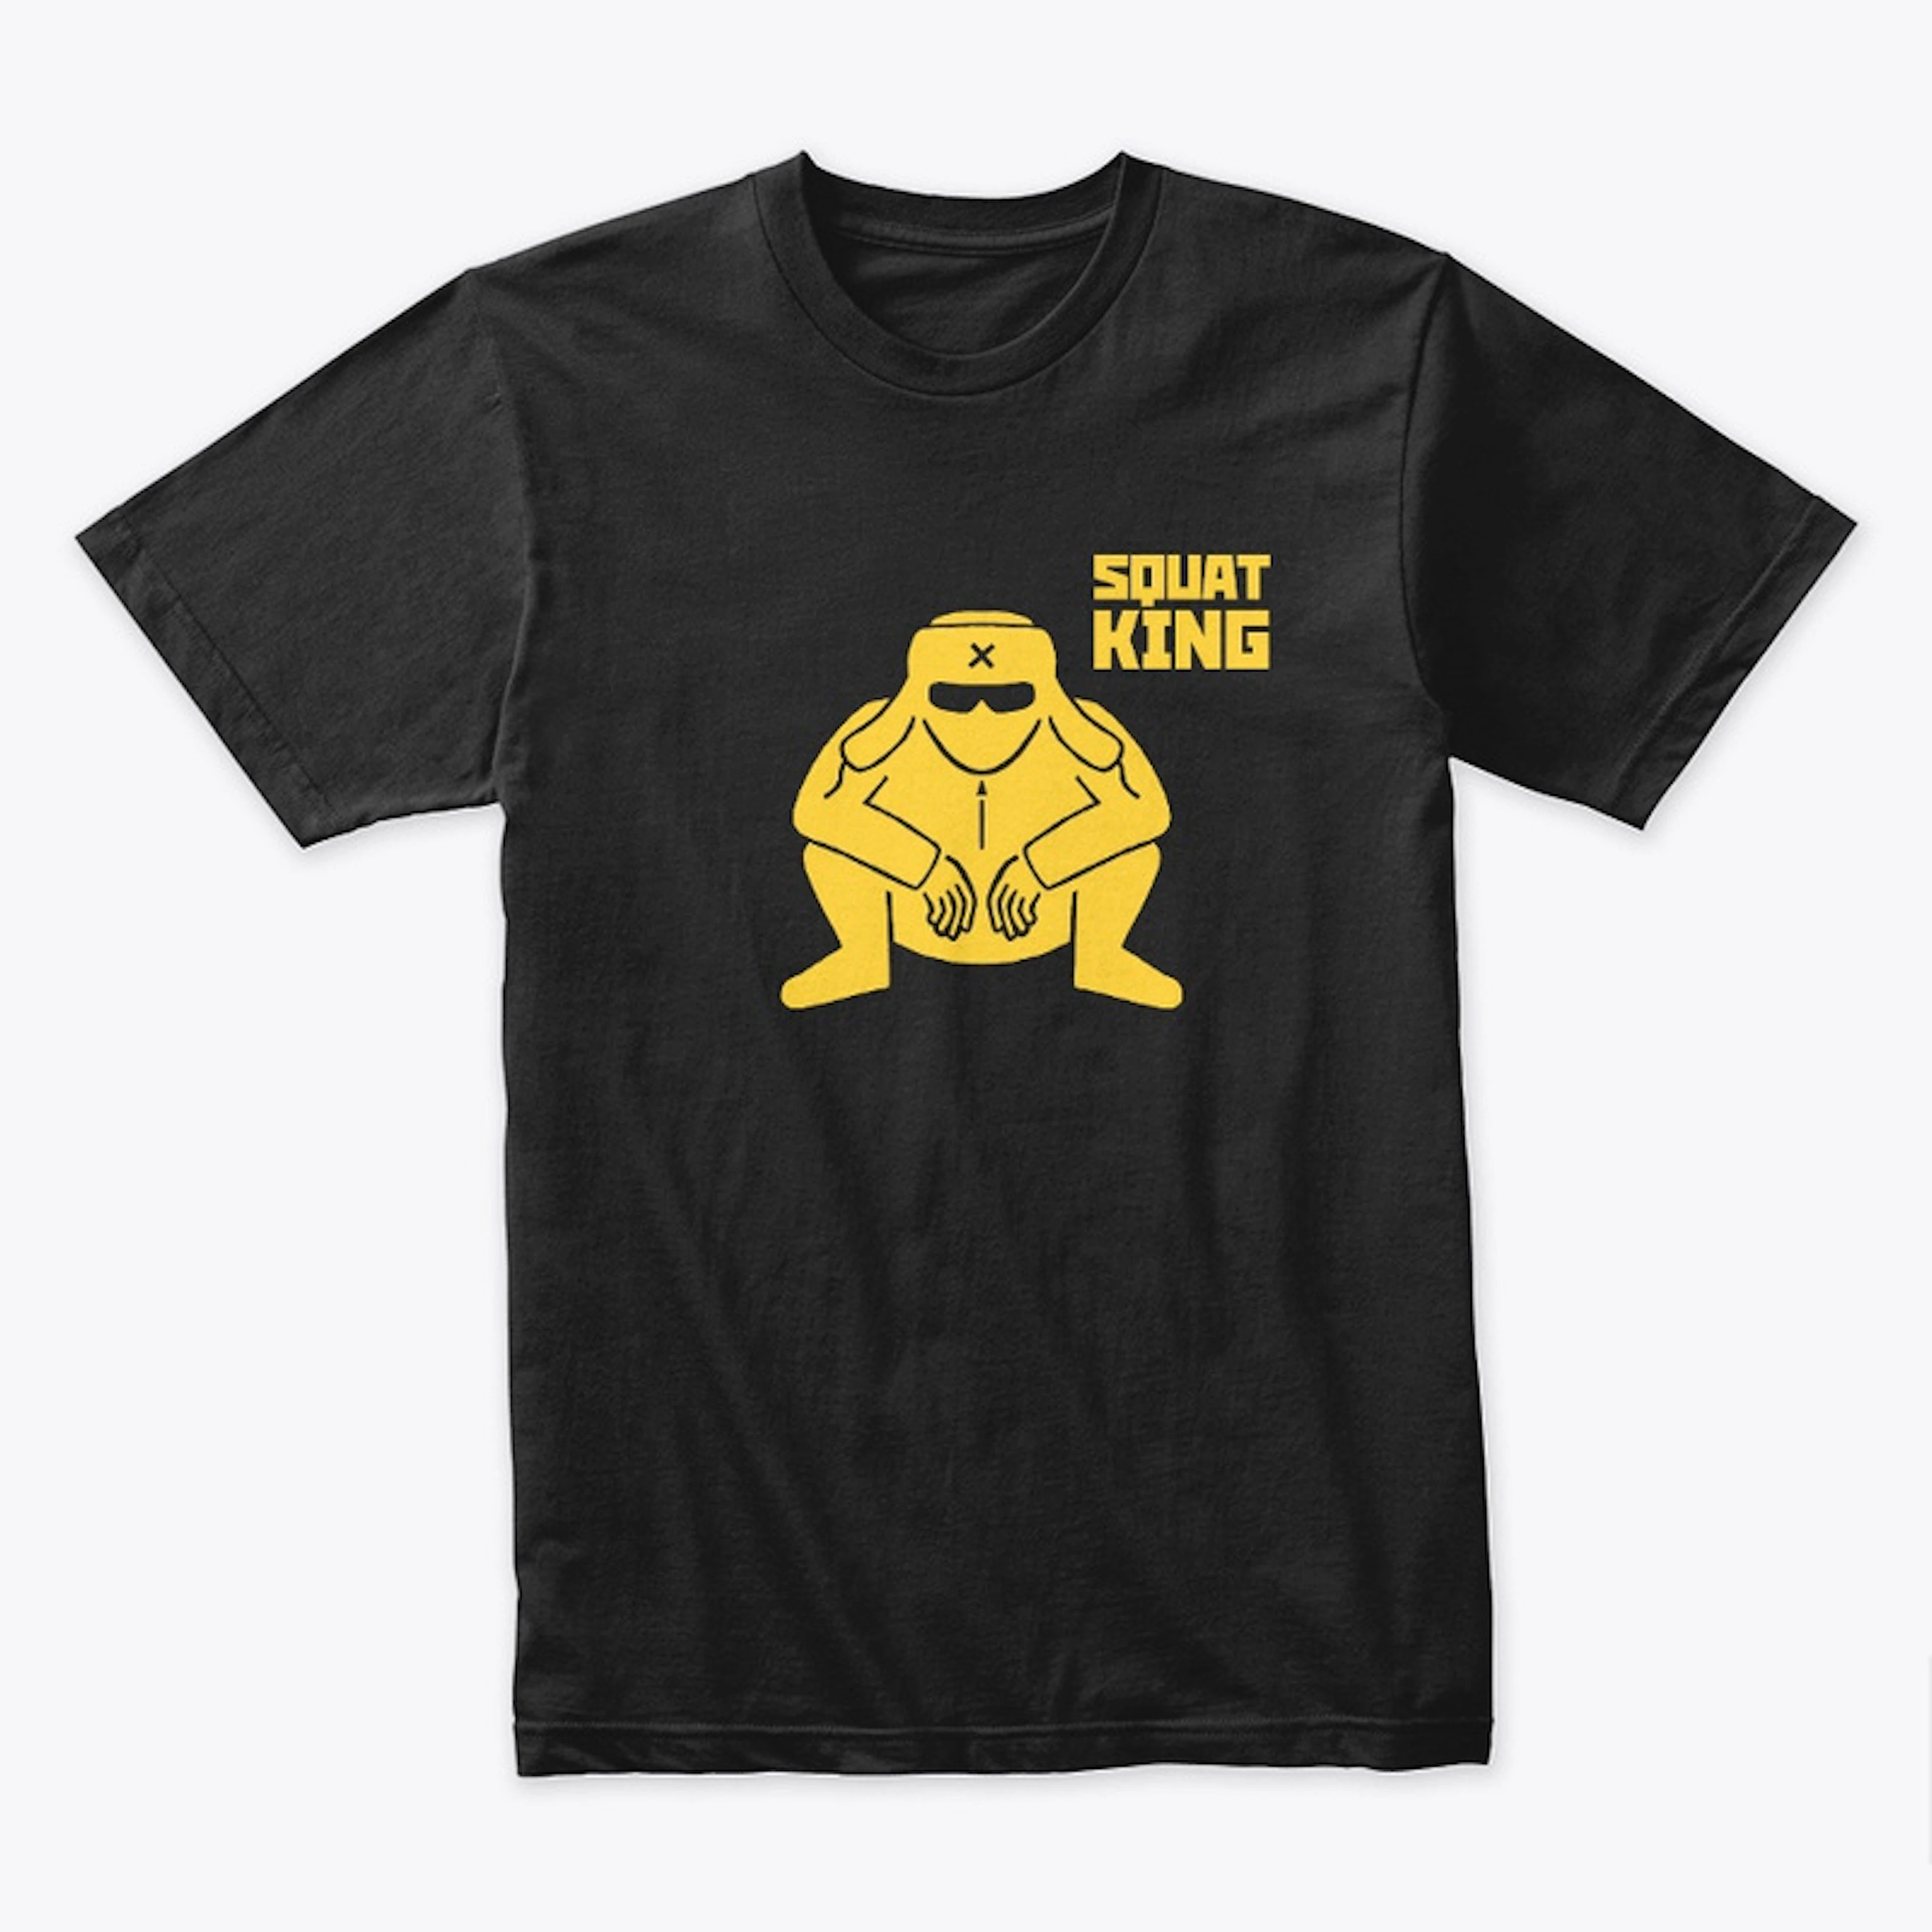 Squat King shirt